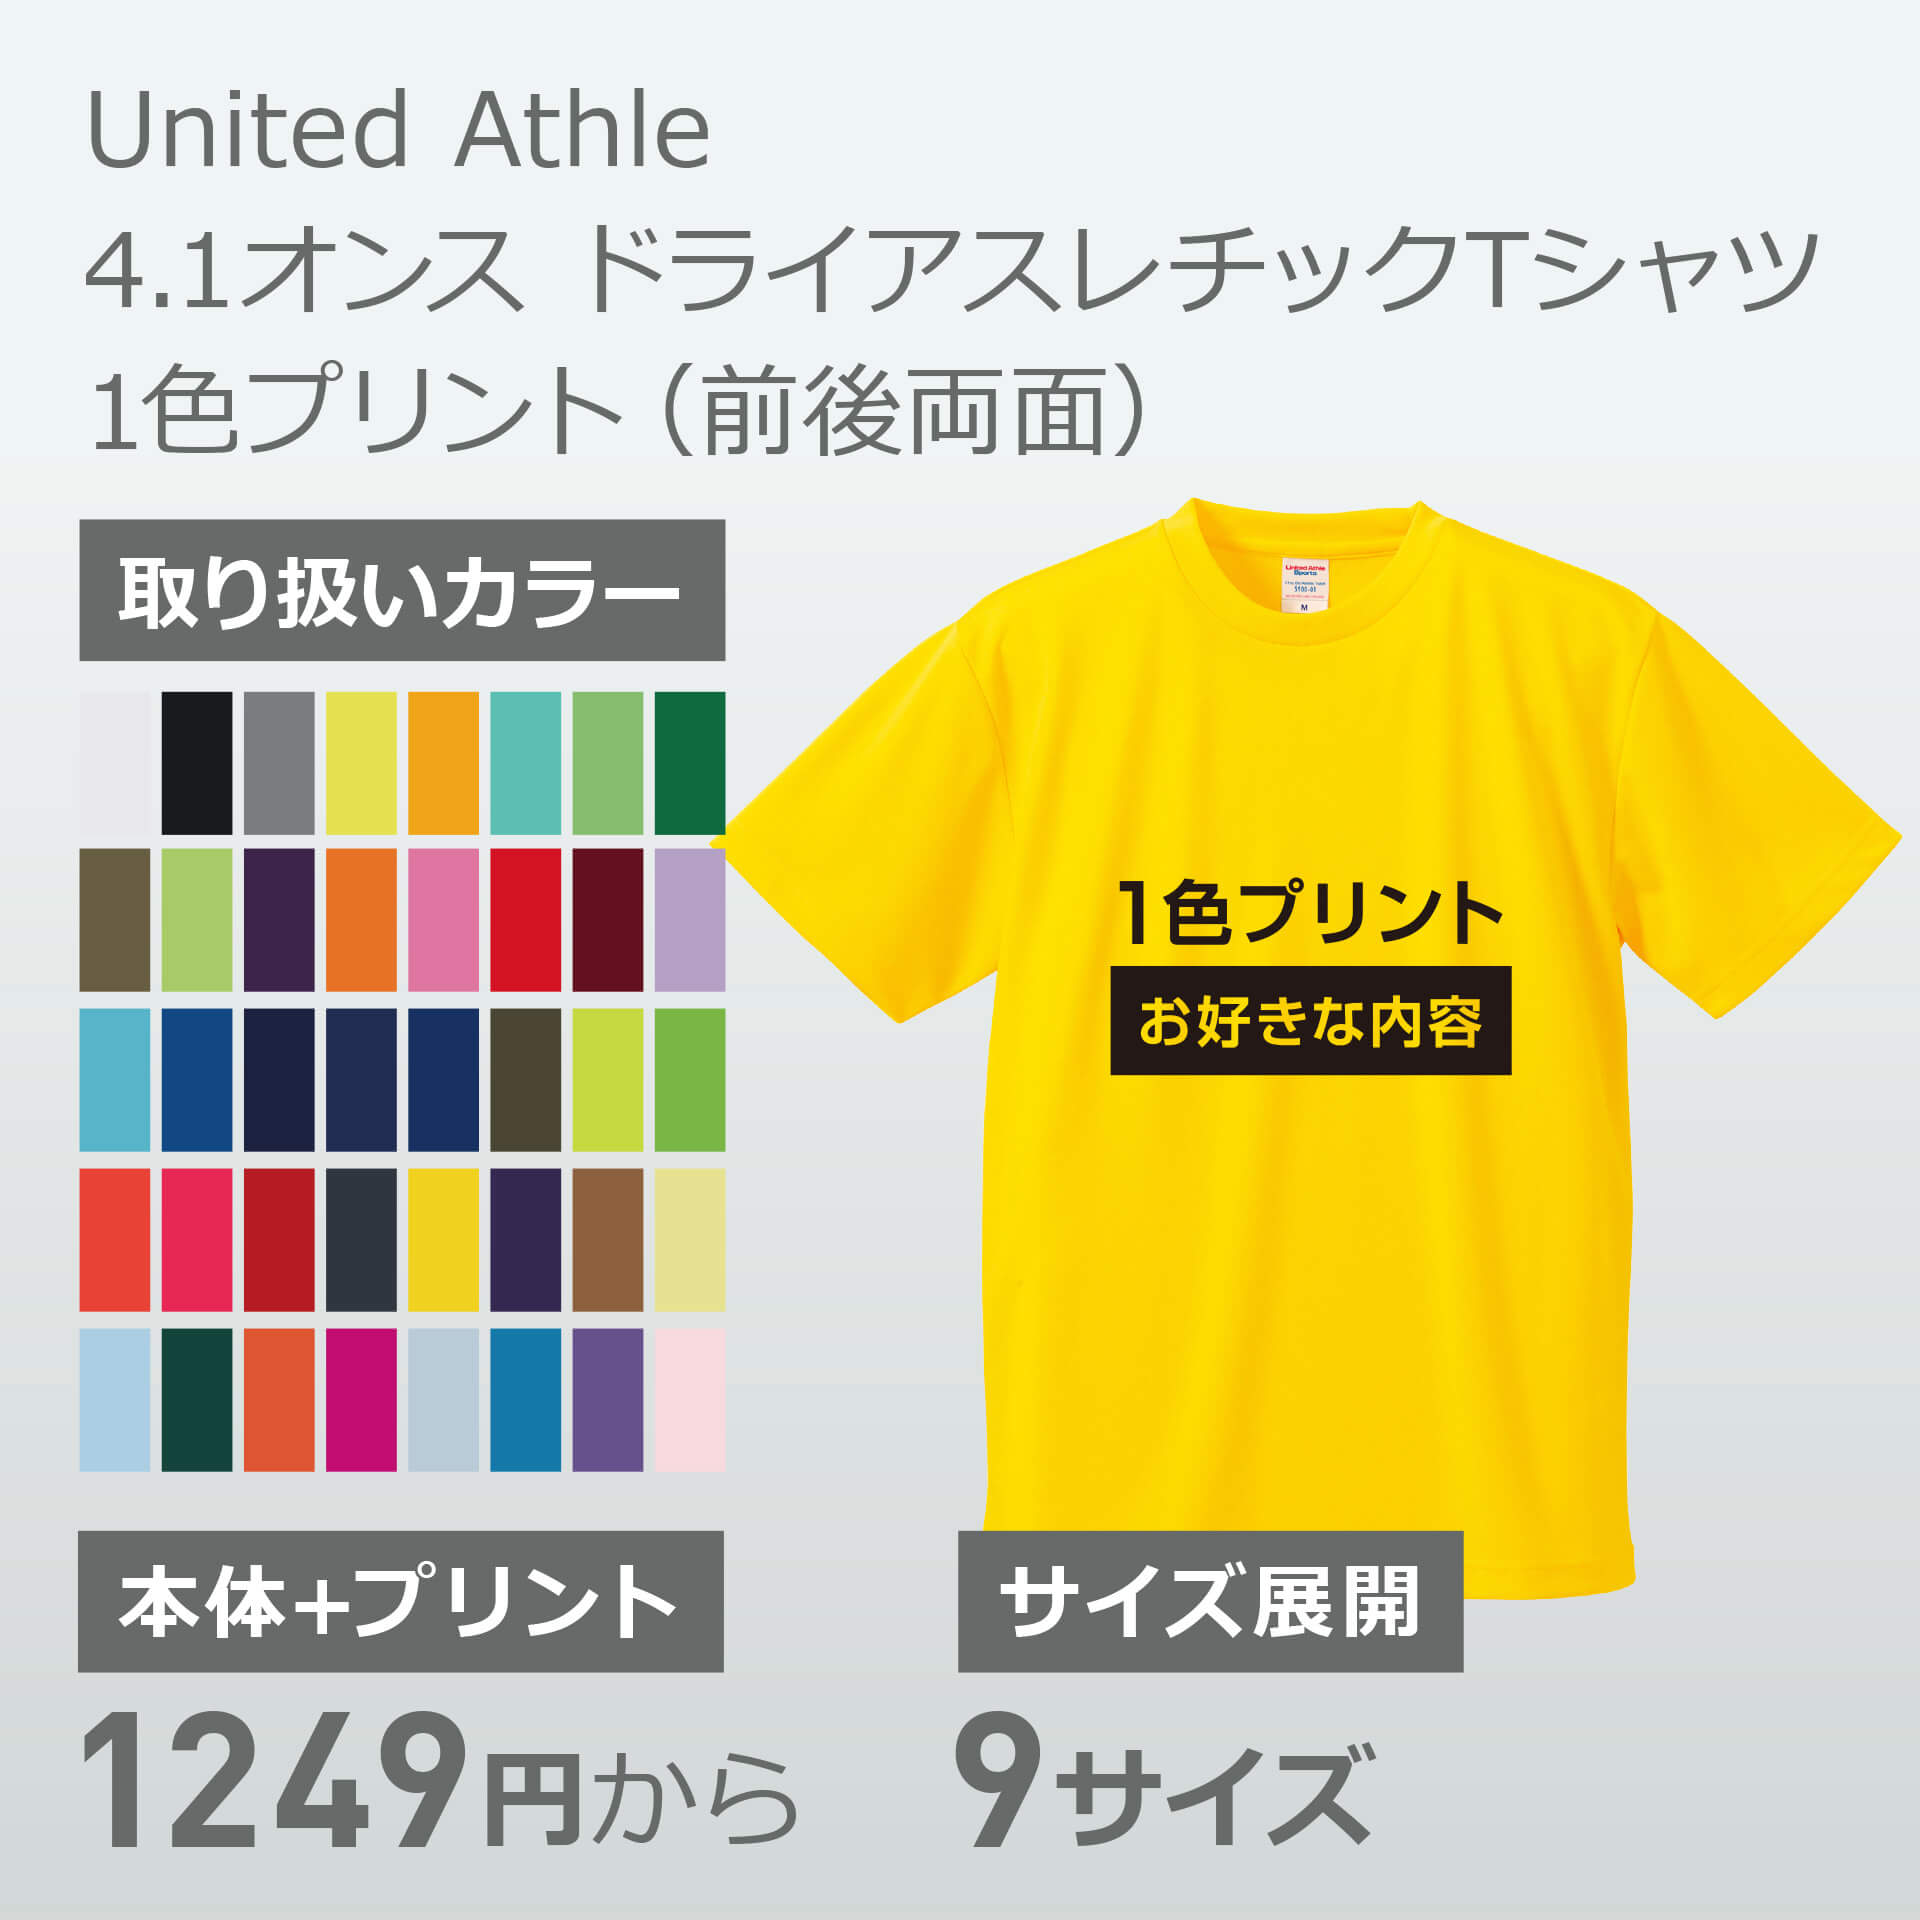 United Athle 4.1オンス ドライアスレチックTシャツ 1色プリント(前後両面)